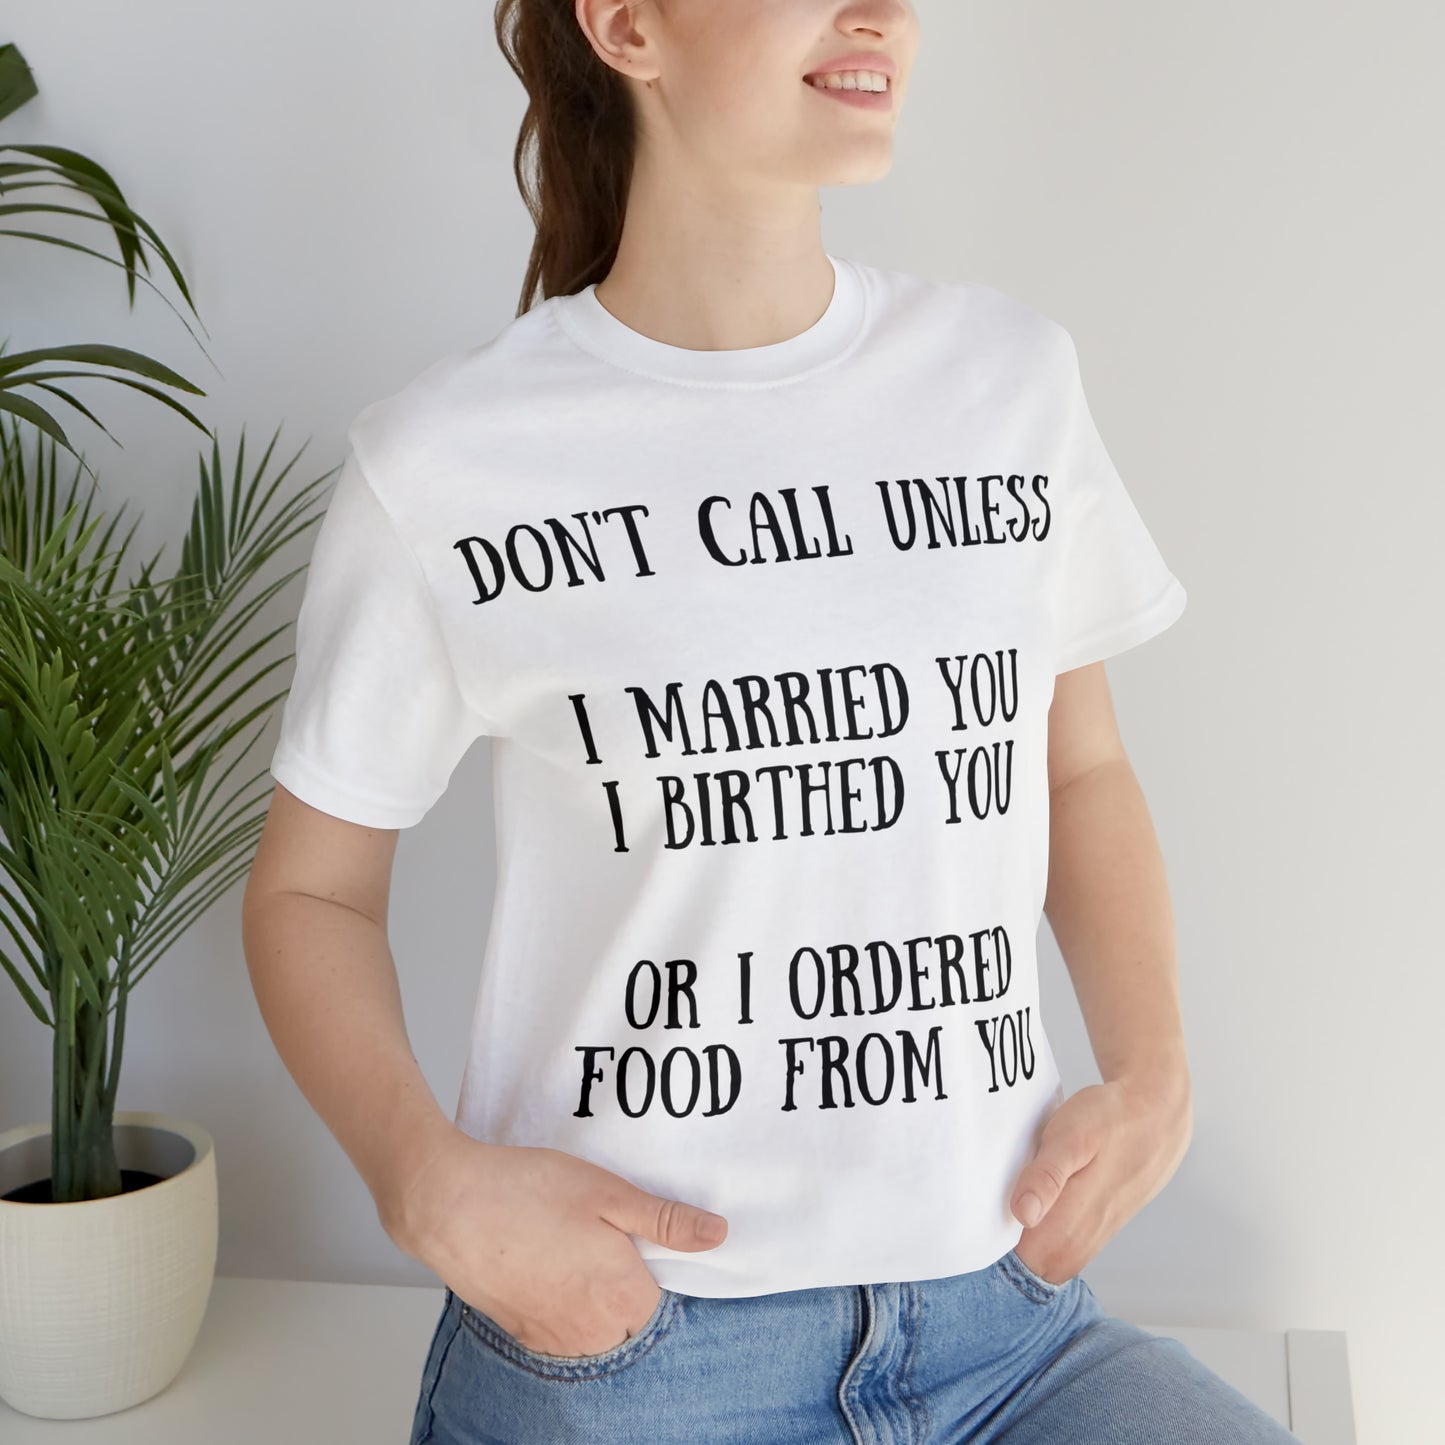 Don't Call Unless T-Shirt